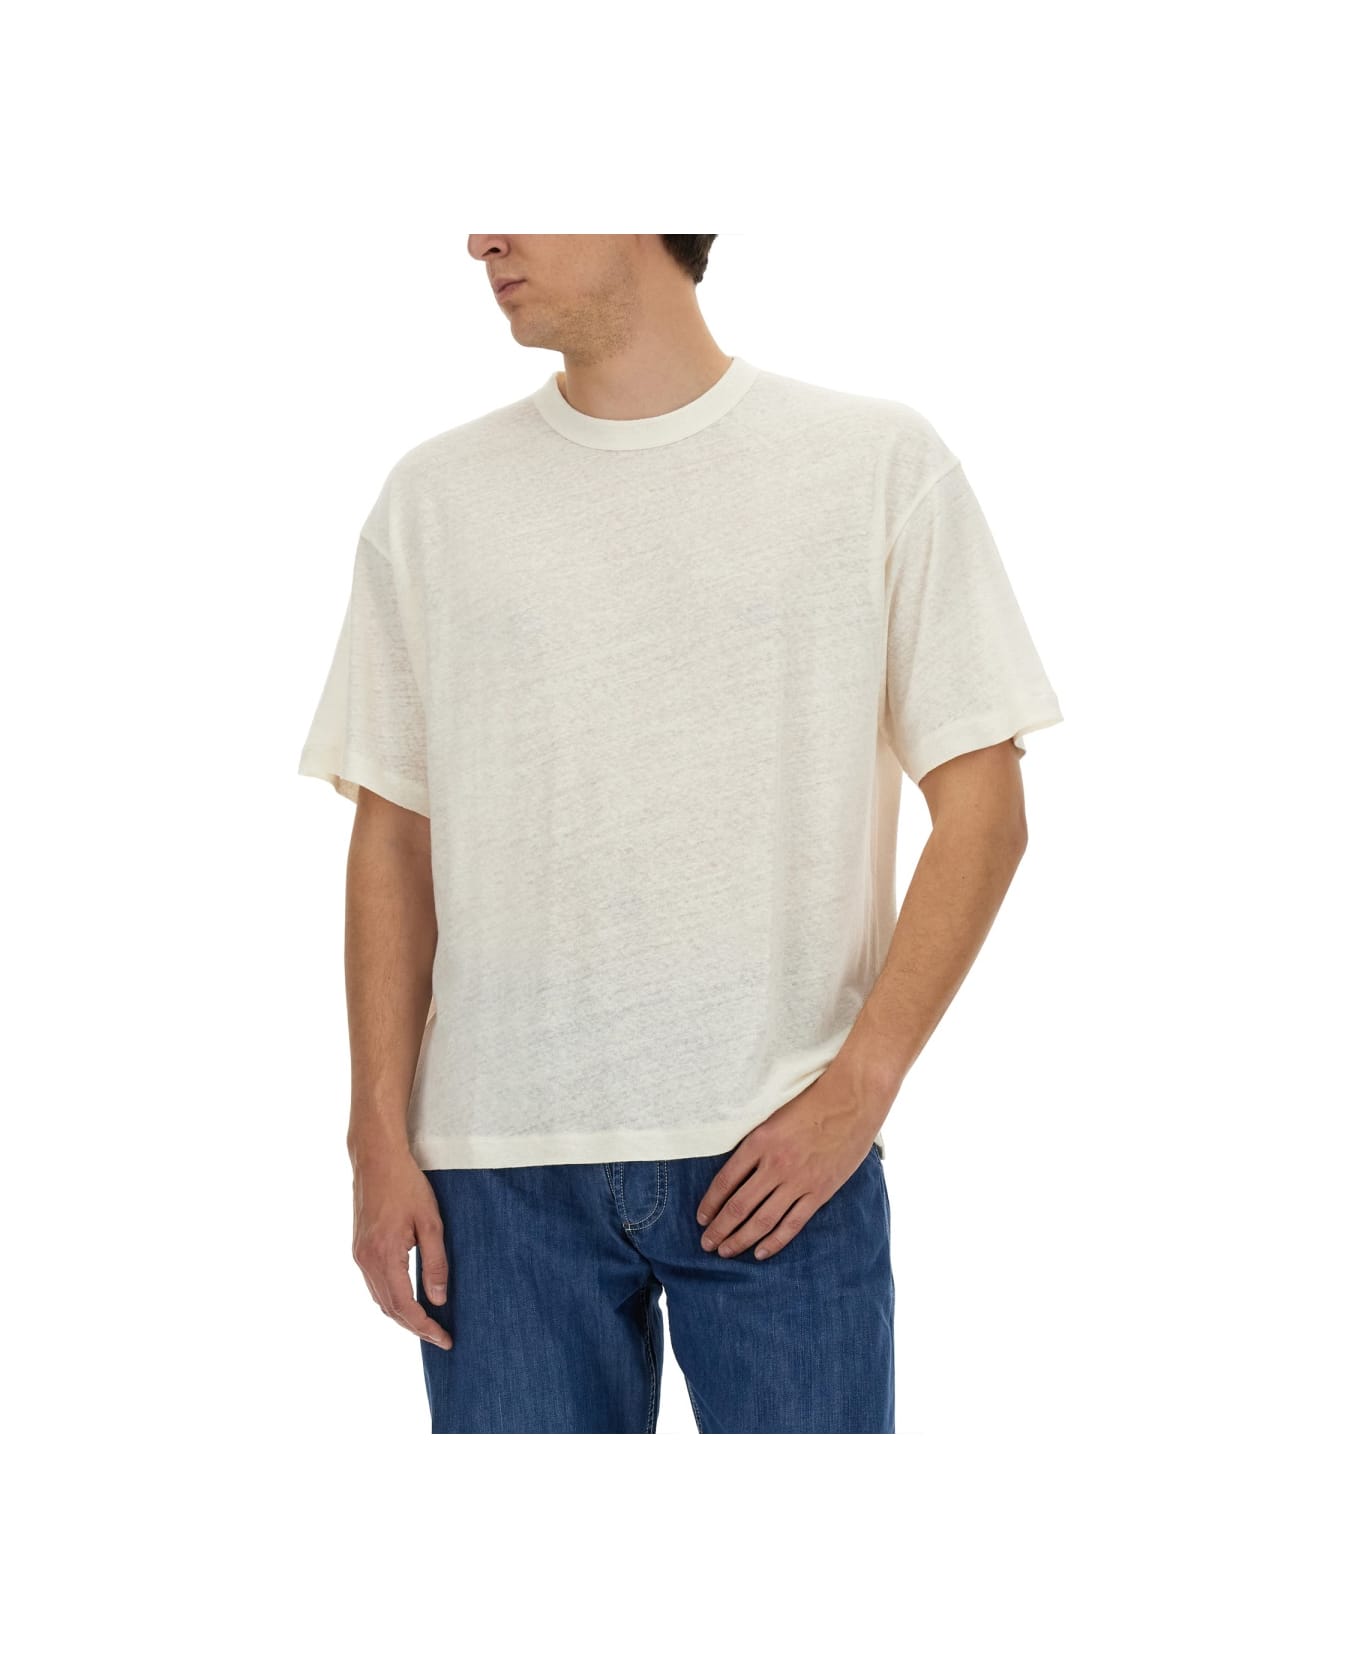 YMC Cotton And Linen T-shirt - WHITE